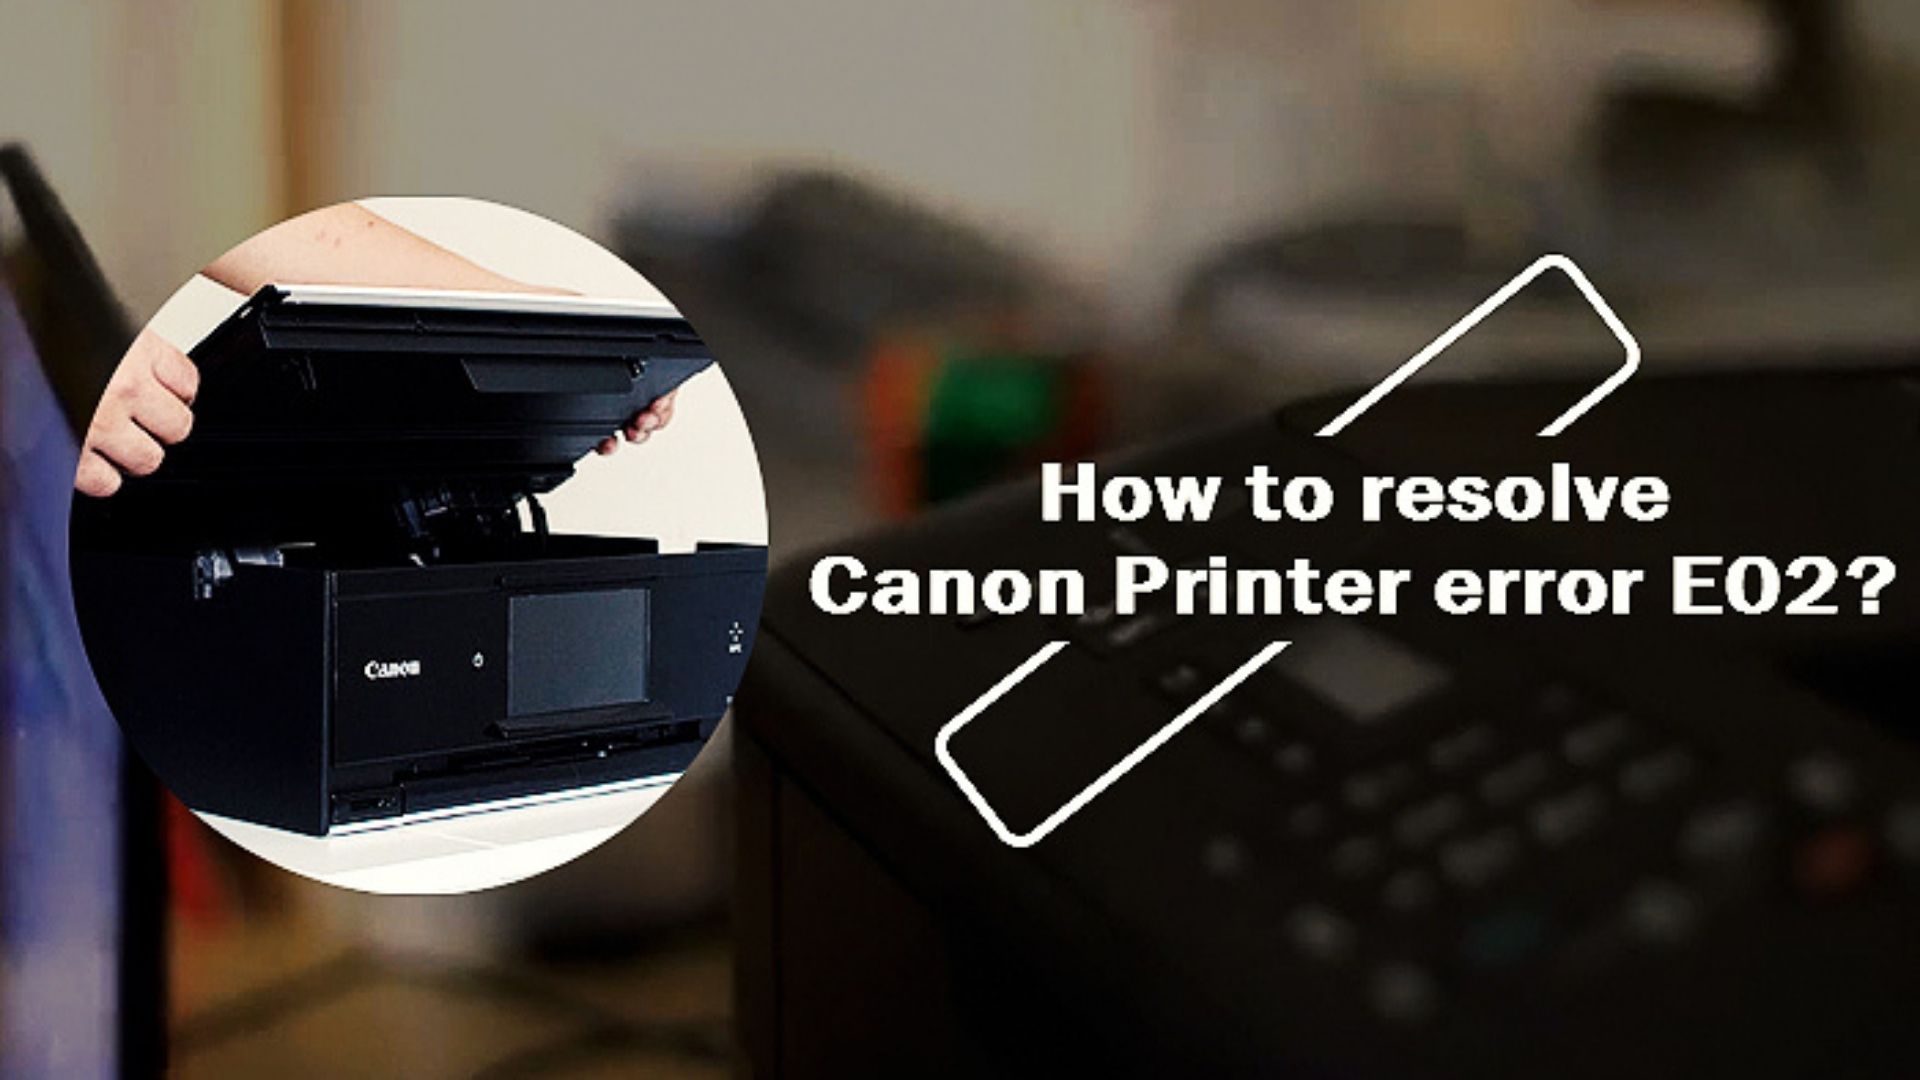 canon printer error e02